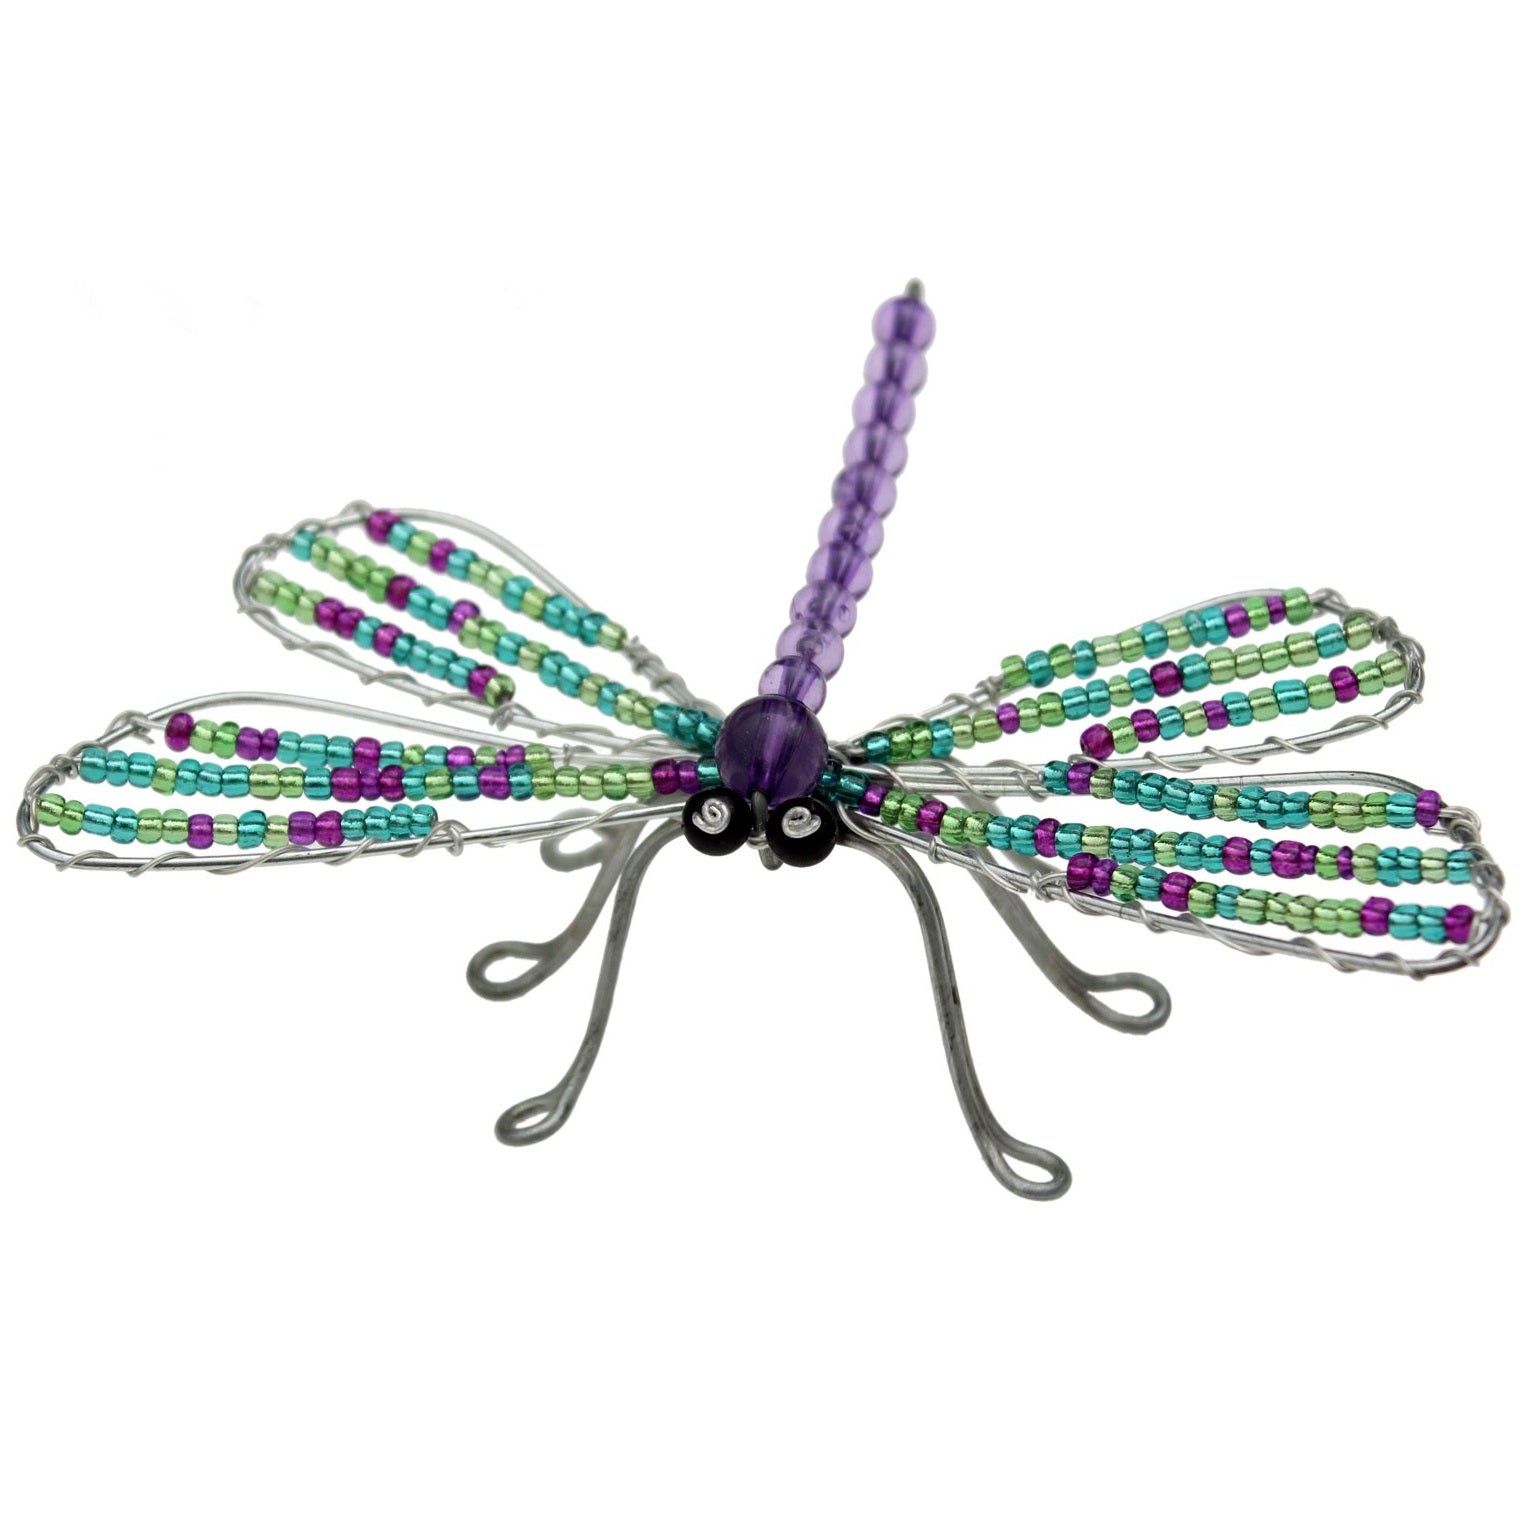 Dragonfly (10DFLSS1)